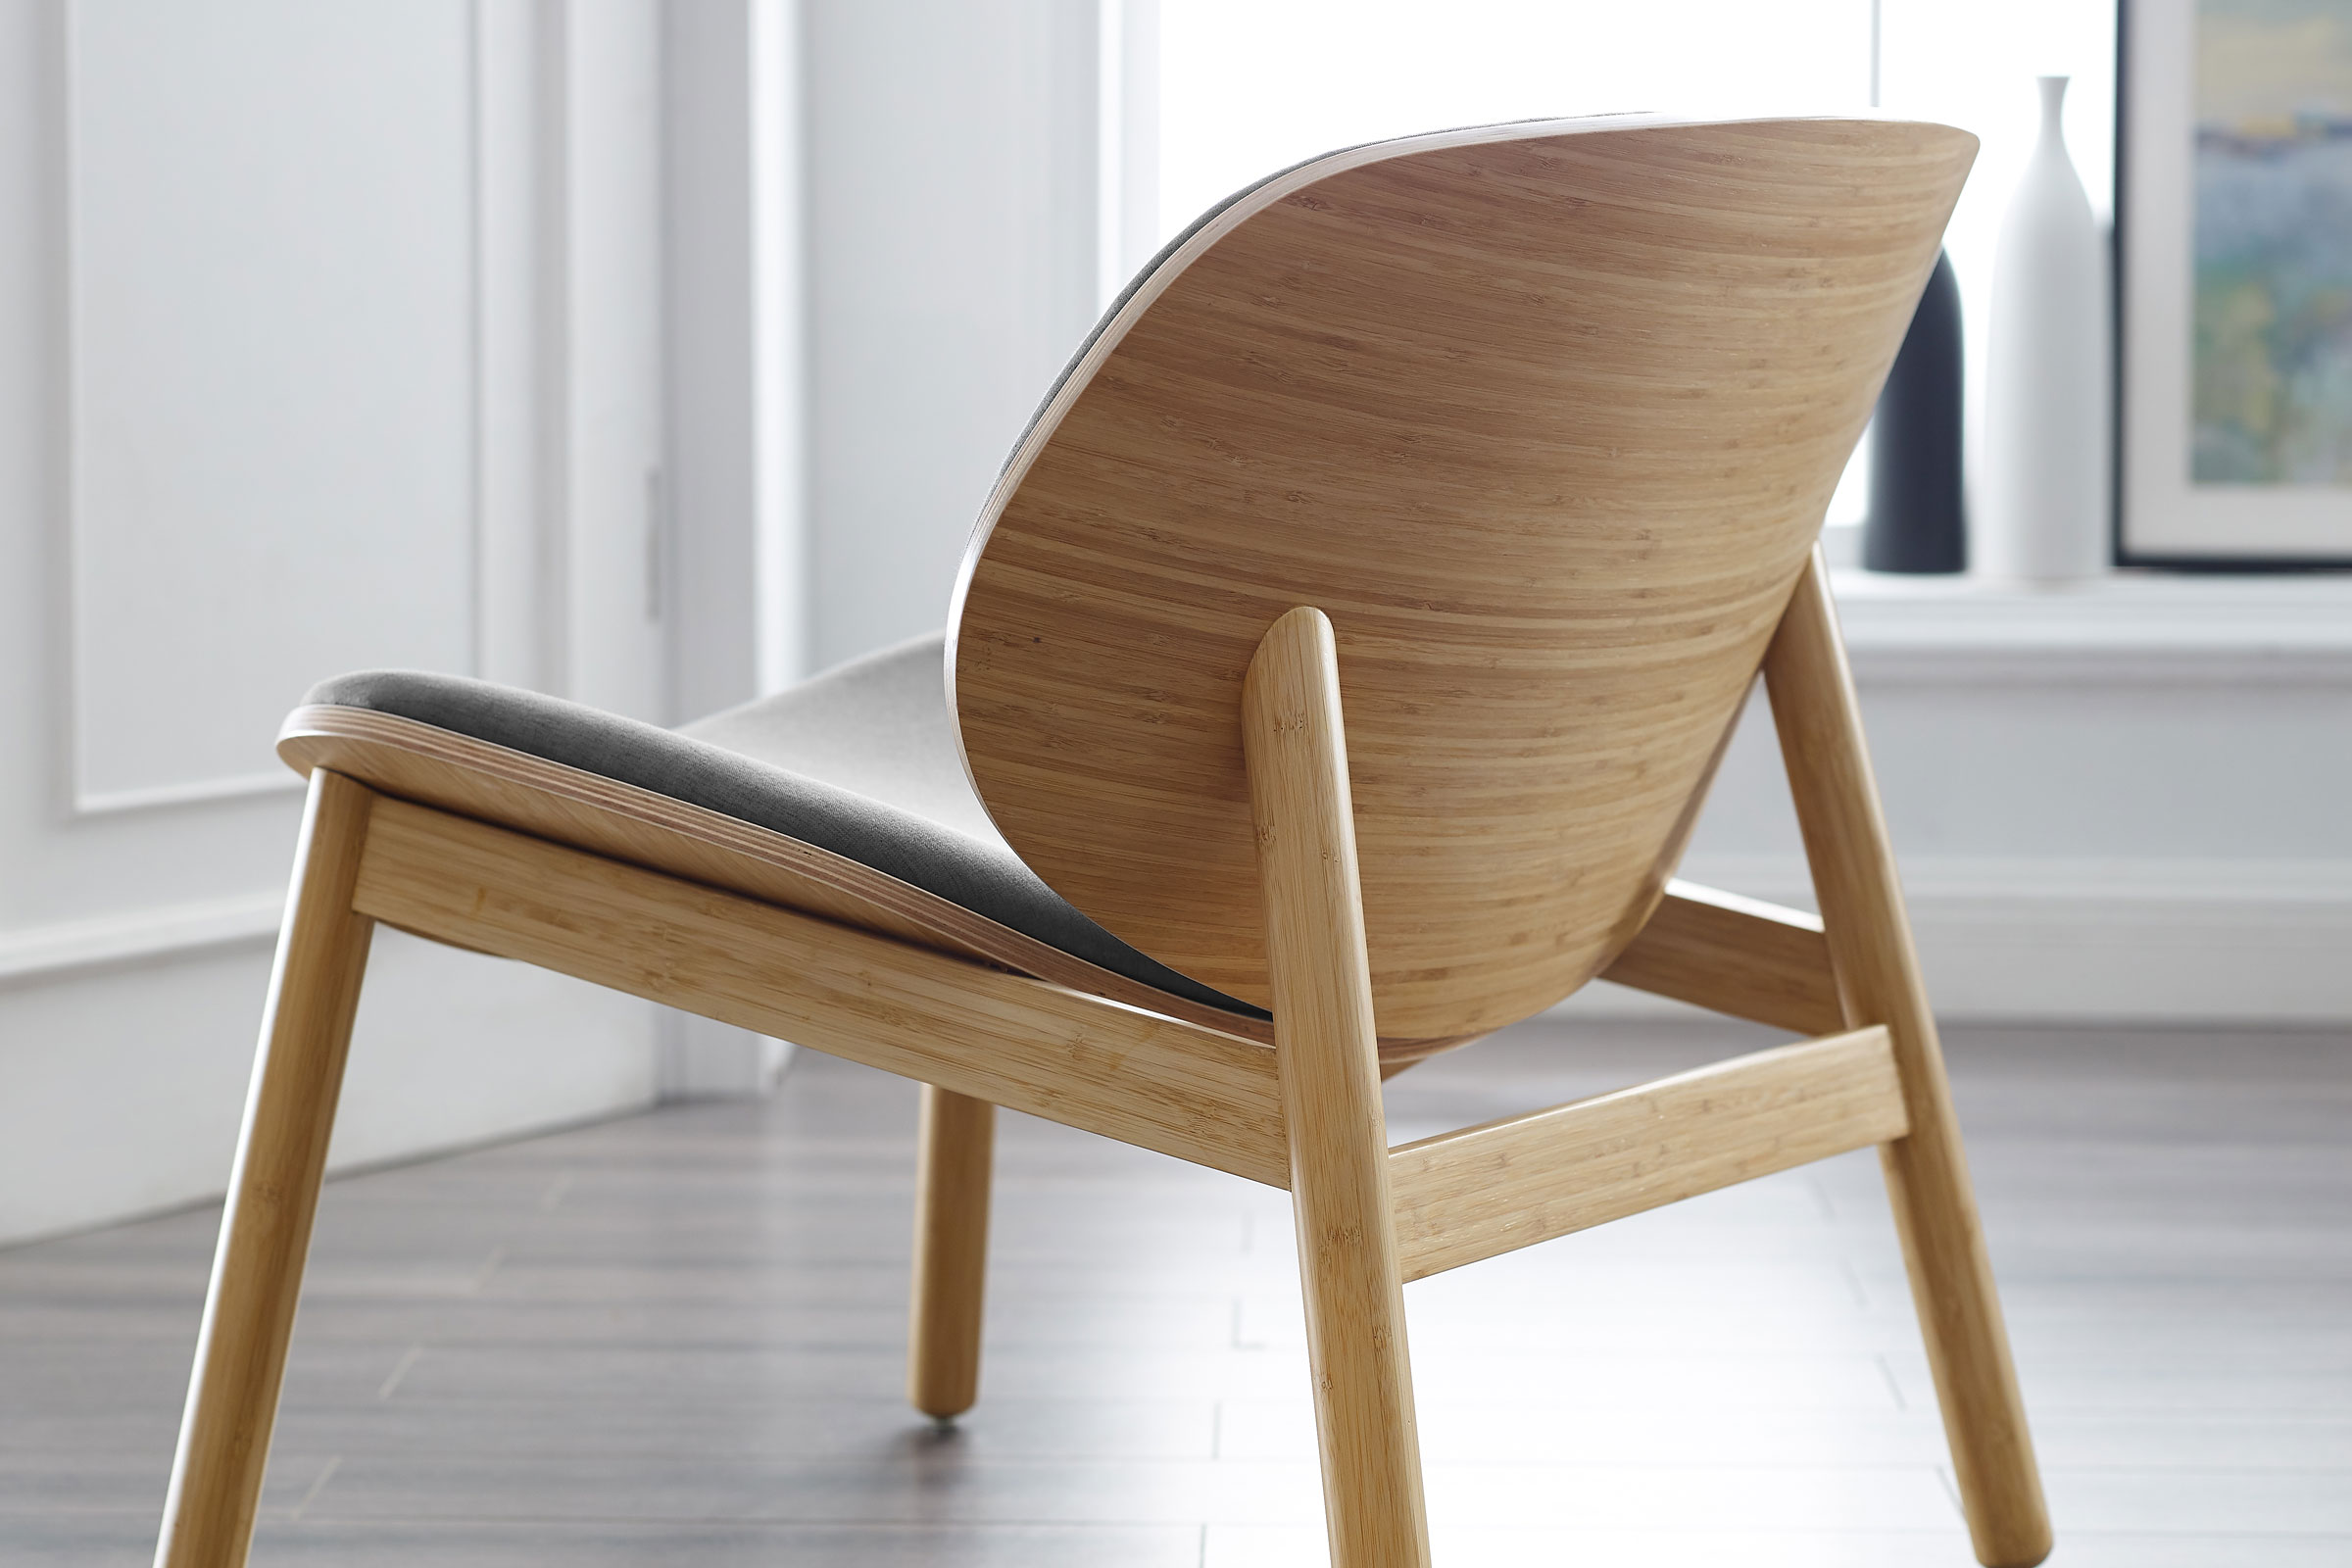 greenington bamboo chair design ideas gbd magazine 03